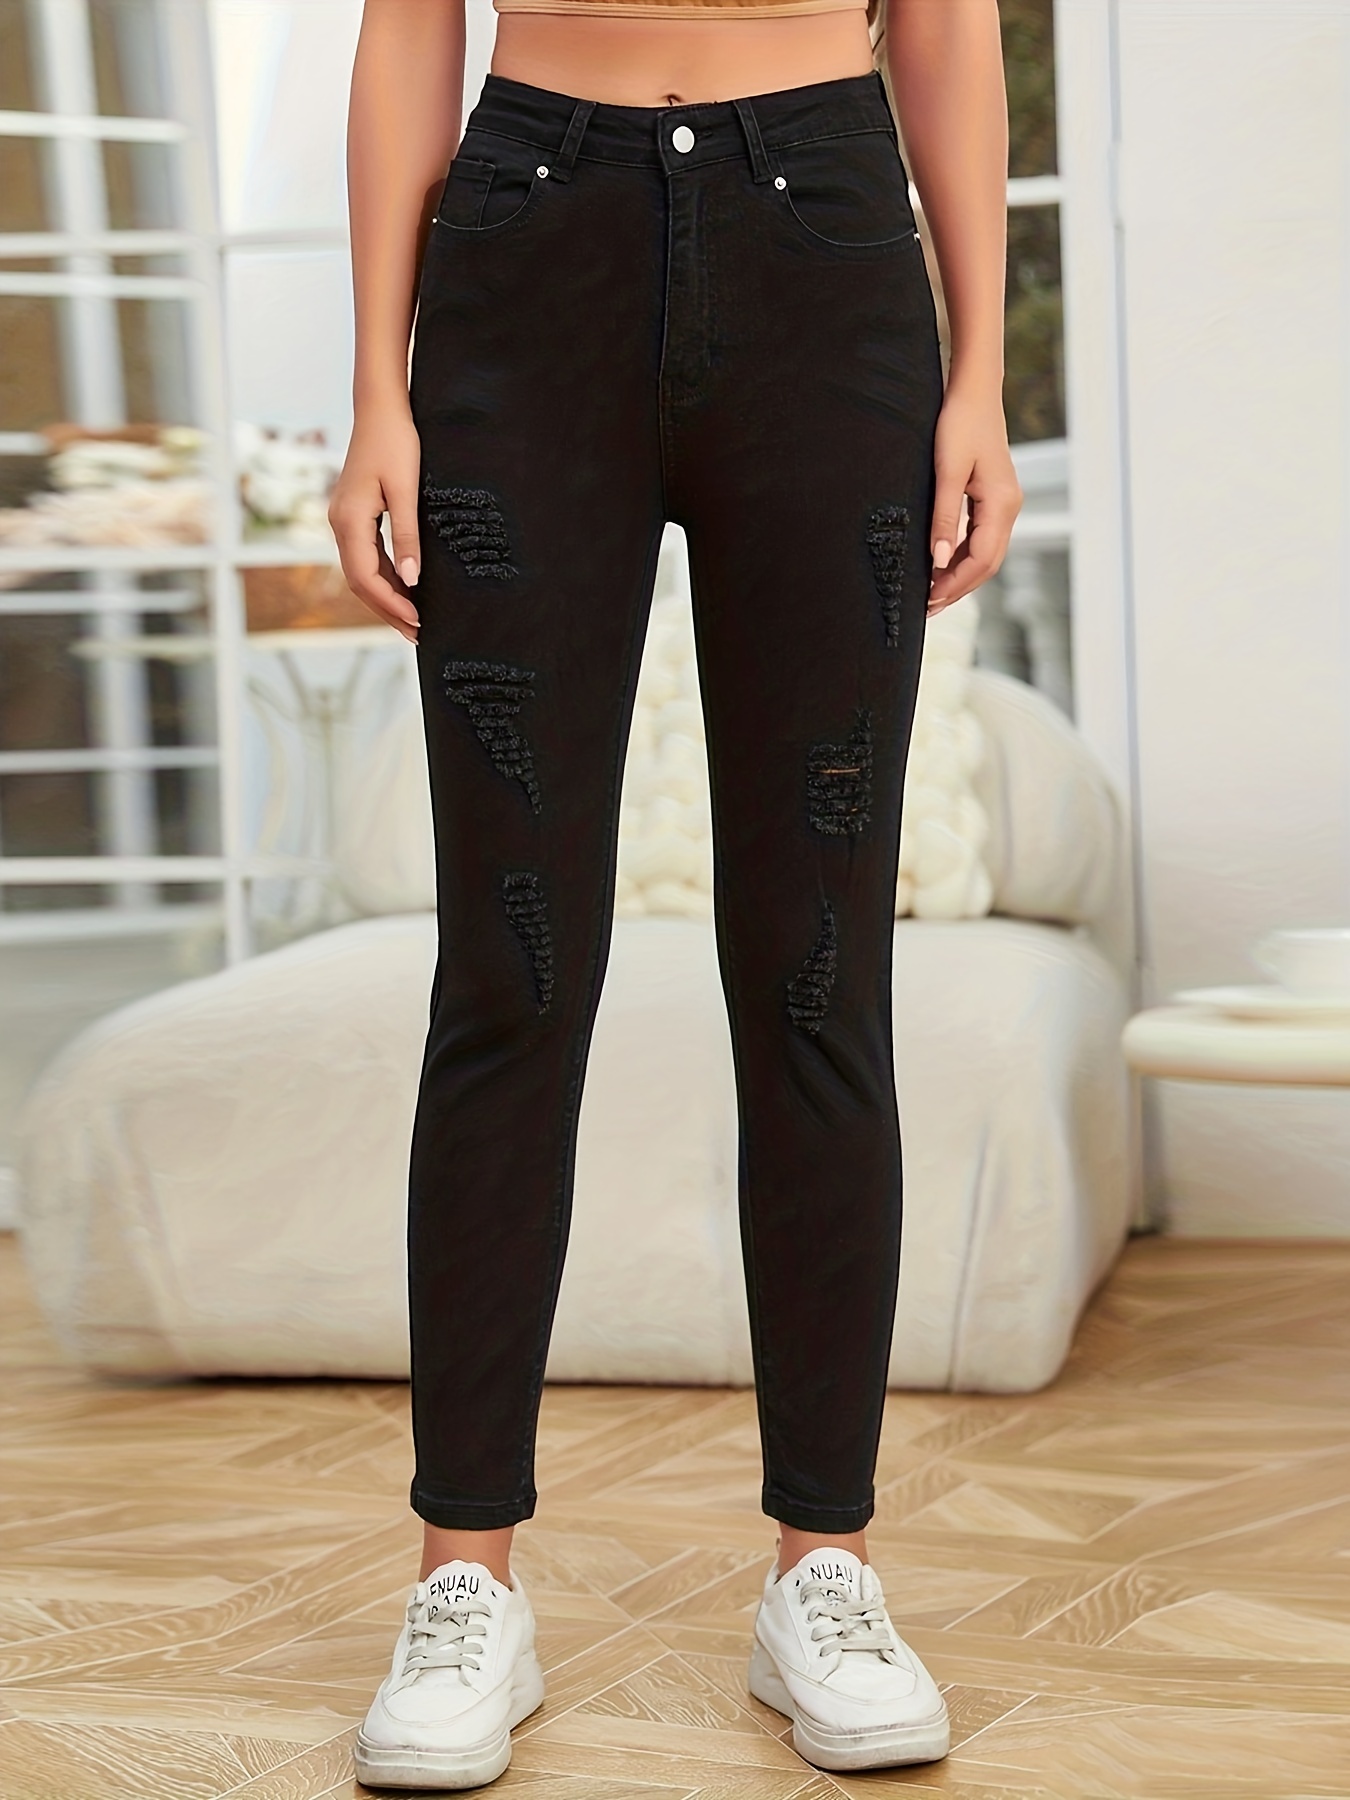 Black Grommet Zipper Super Skinny Jeans Plus Size